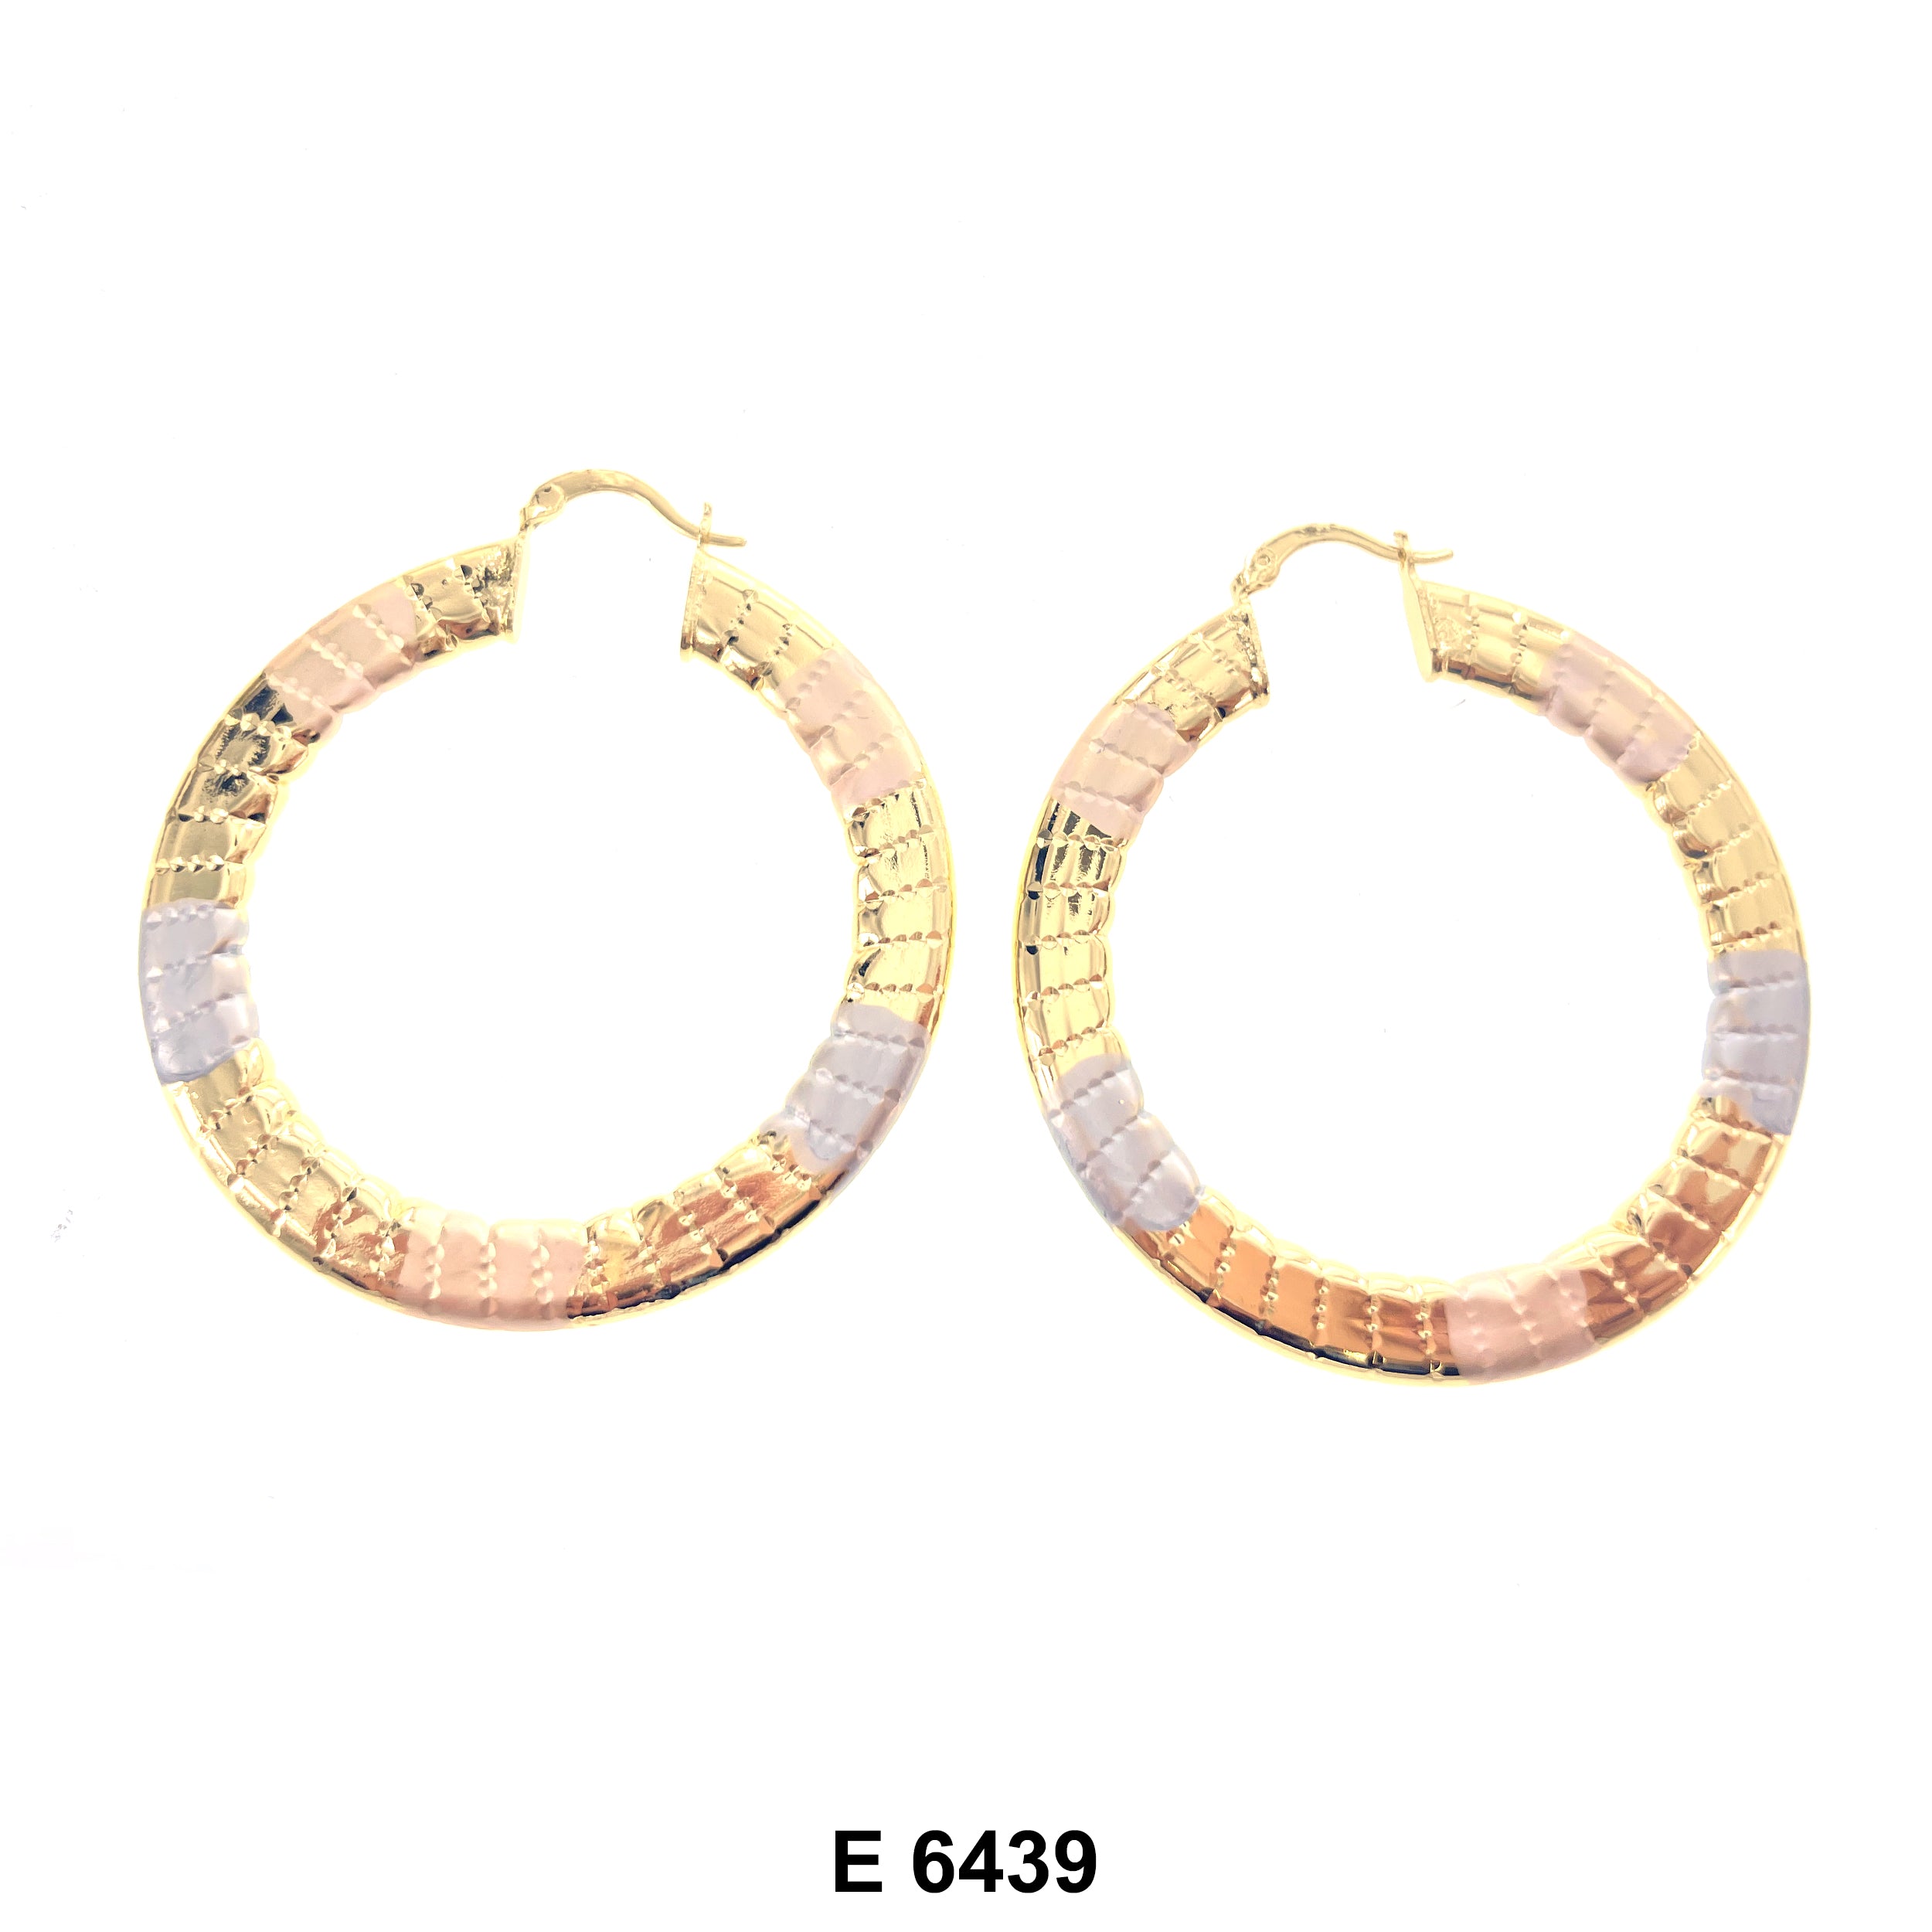 Engraved Hoop Earrings E 6439